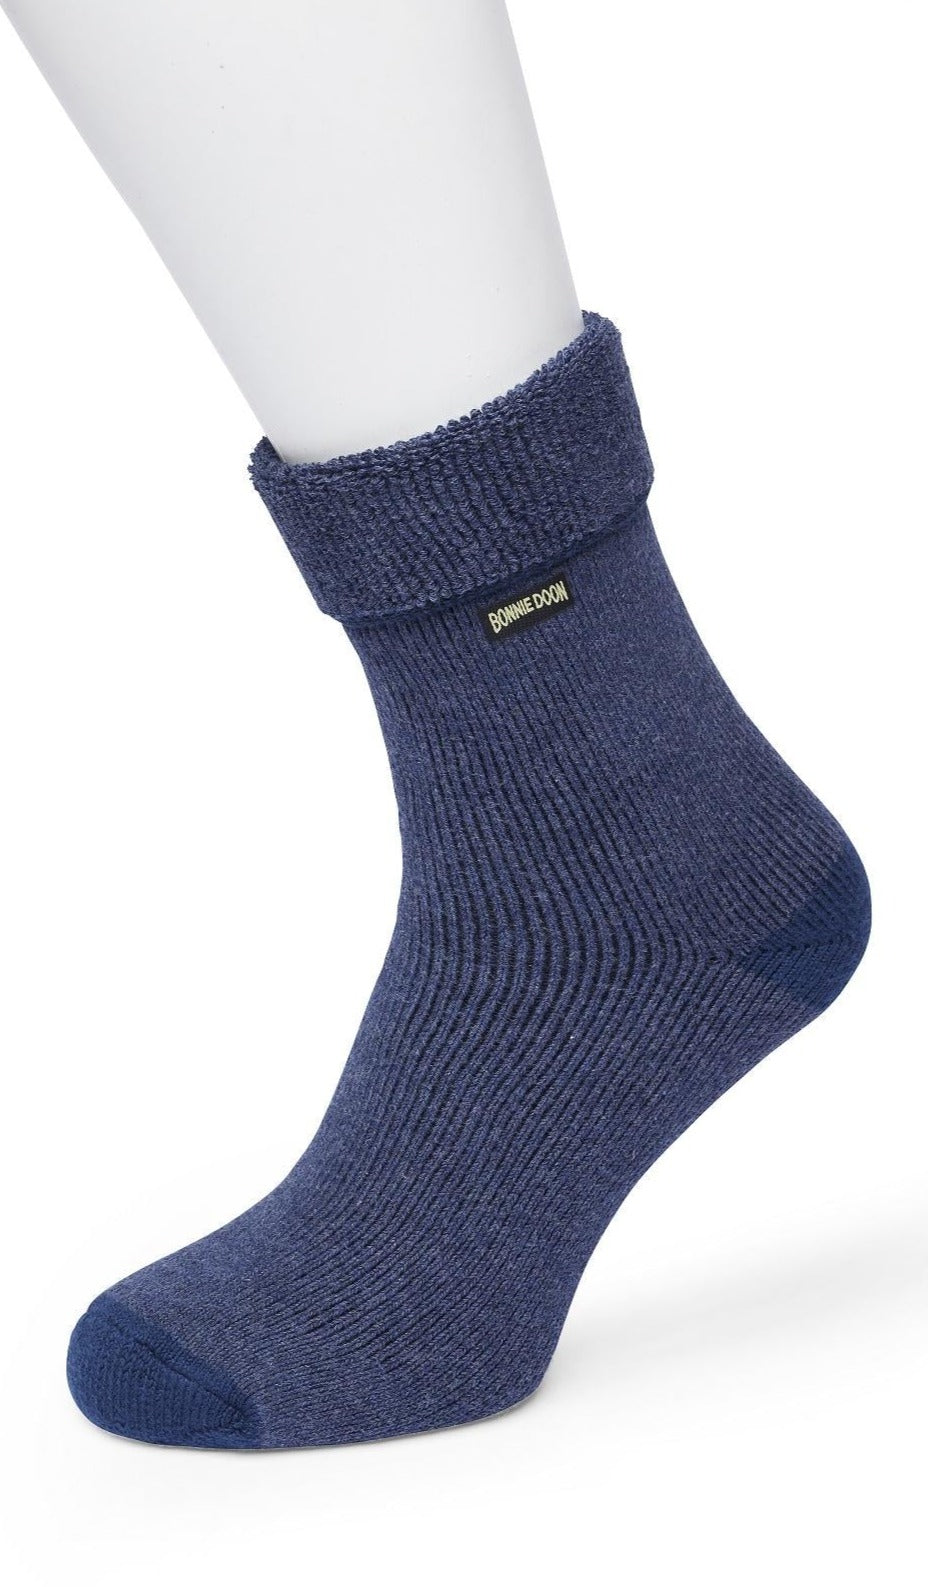 Bonnie Doon BP211123 Cushion Roll Down Sock - Dark blue thick and warm cotton ankle socks with a turn down cuff and flat toe seam.